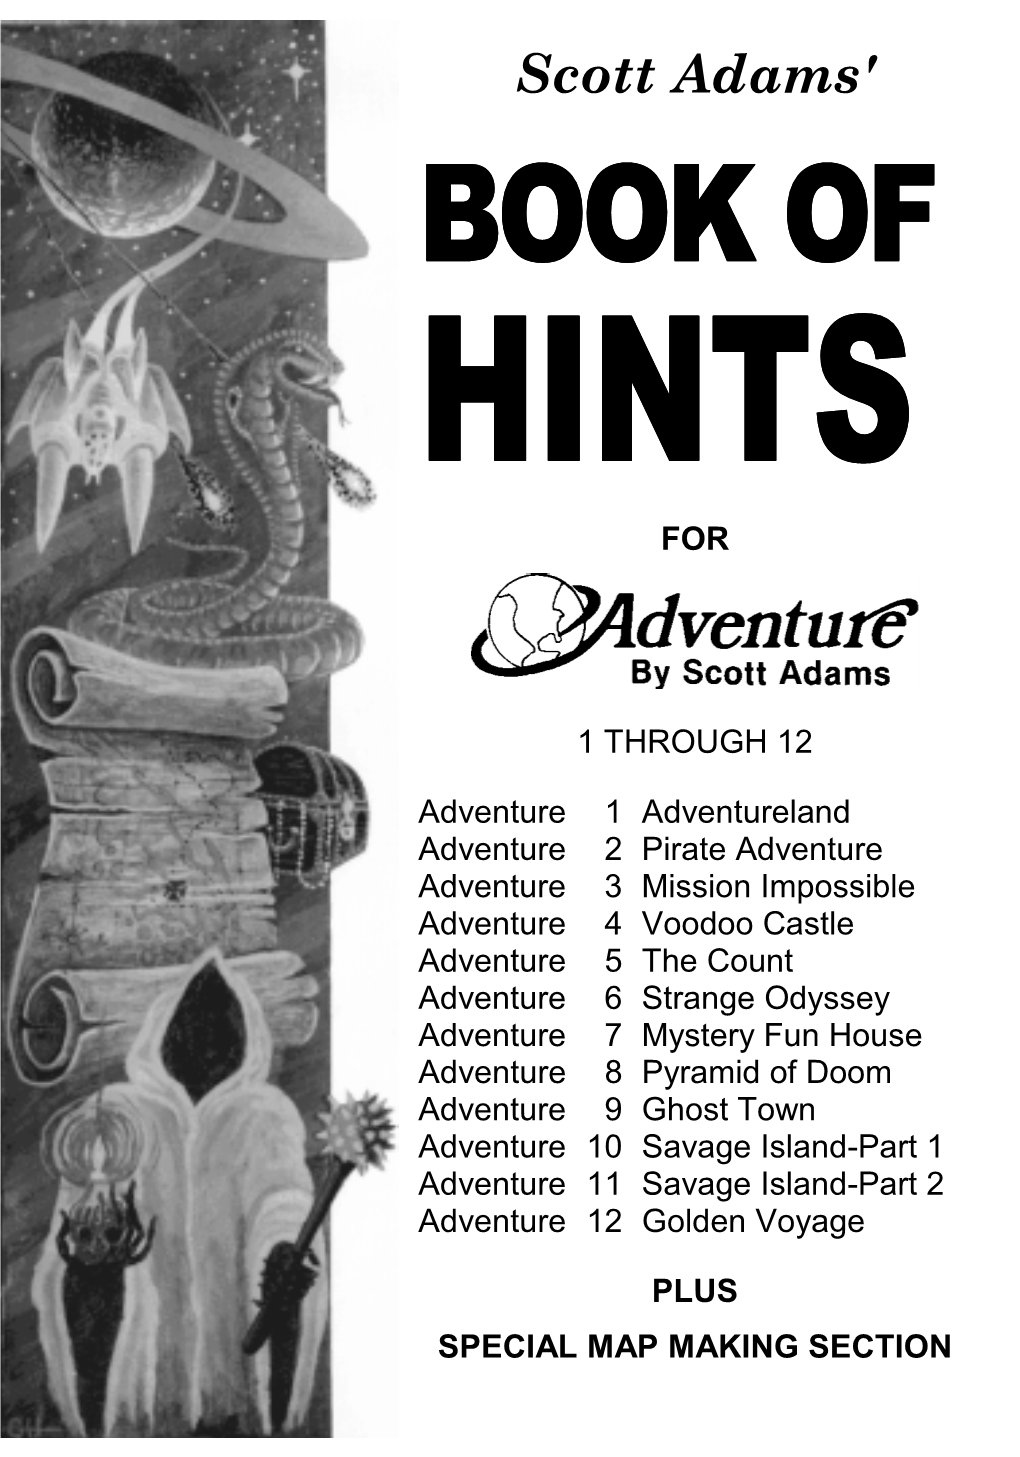 Scott Adams' BOOK of HINTS FOR